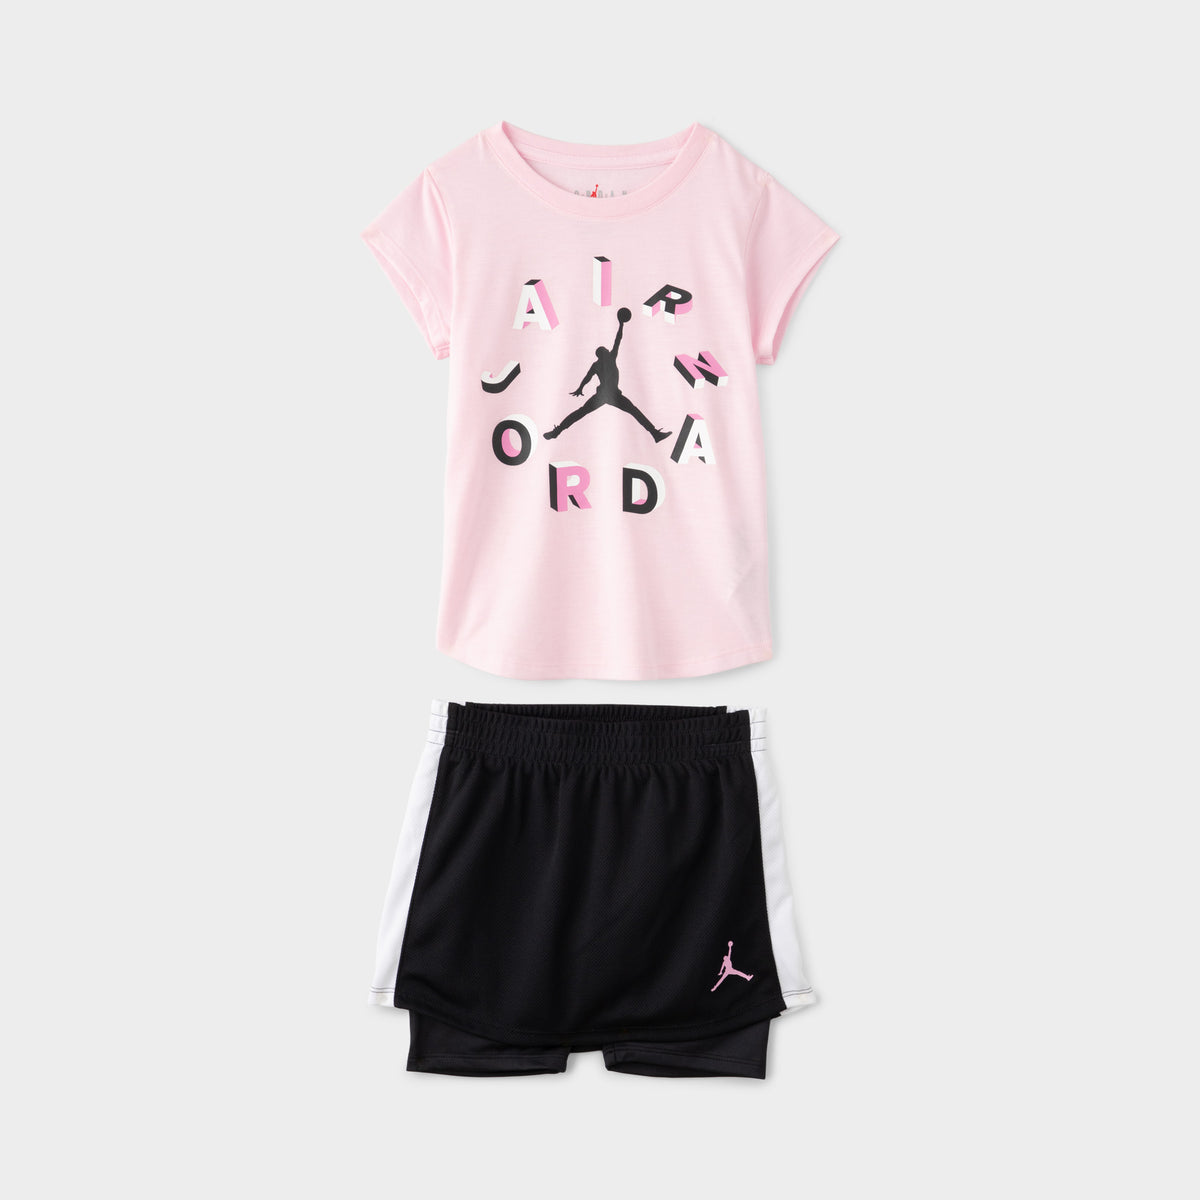 Jordan Child Girls' T-shirt and Skort Set Pink / Black | JD Sports Canada